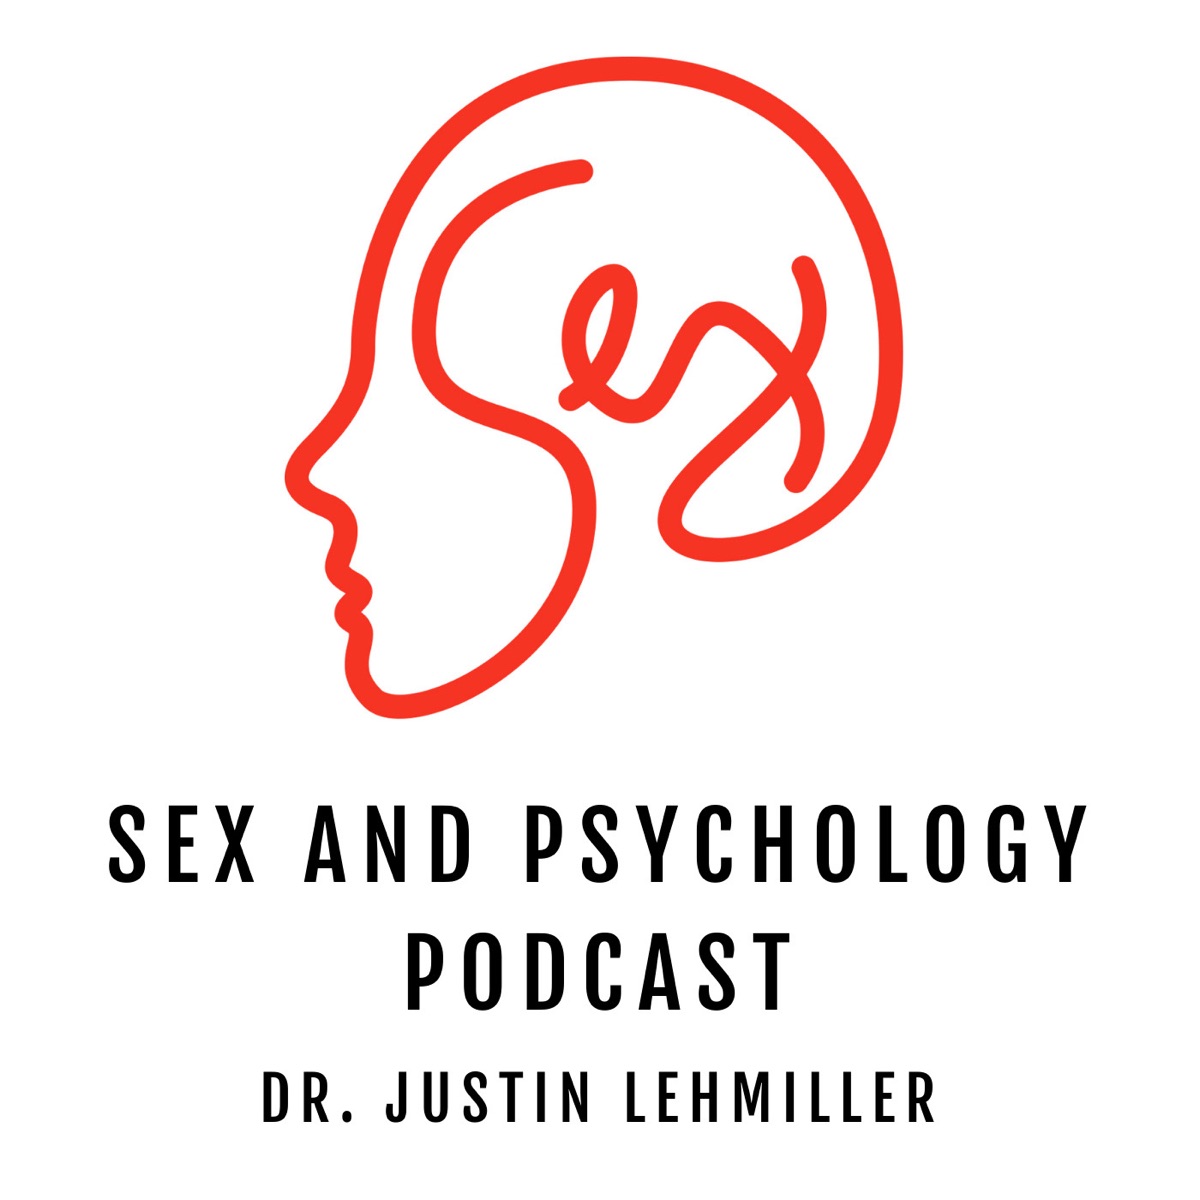 Sex and Psychology Podcast – Podcast